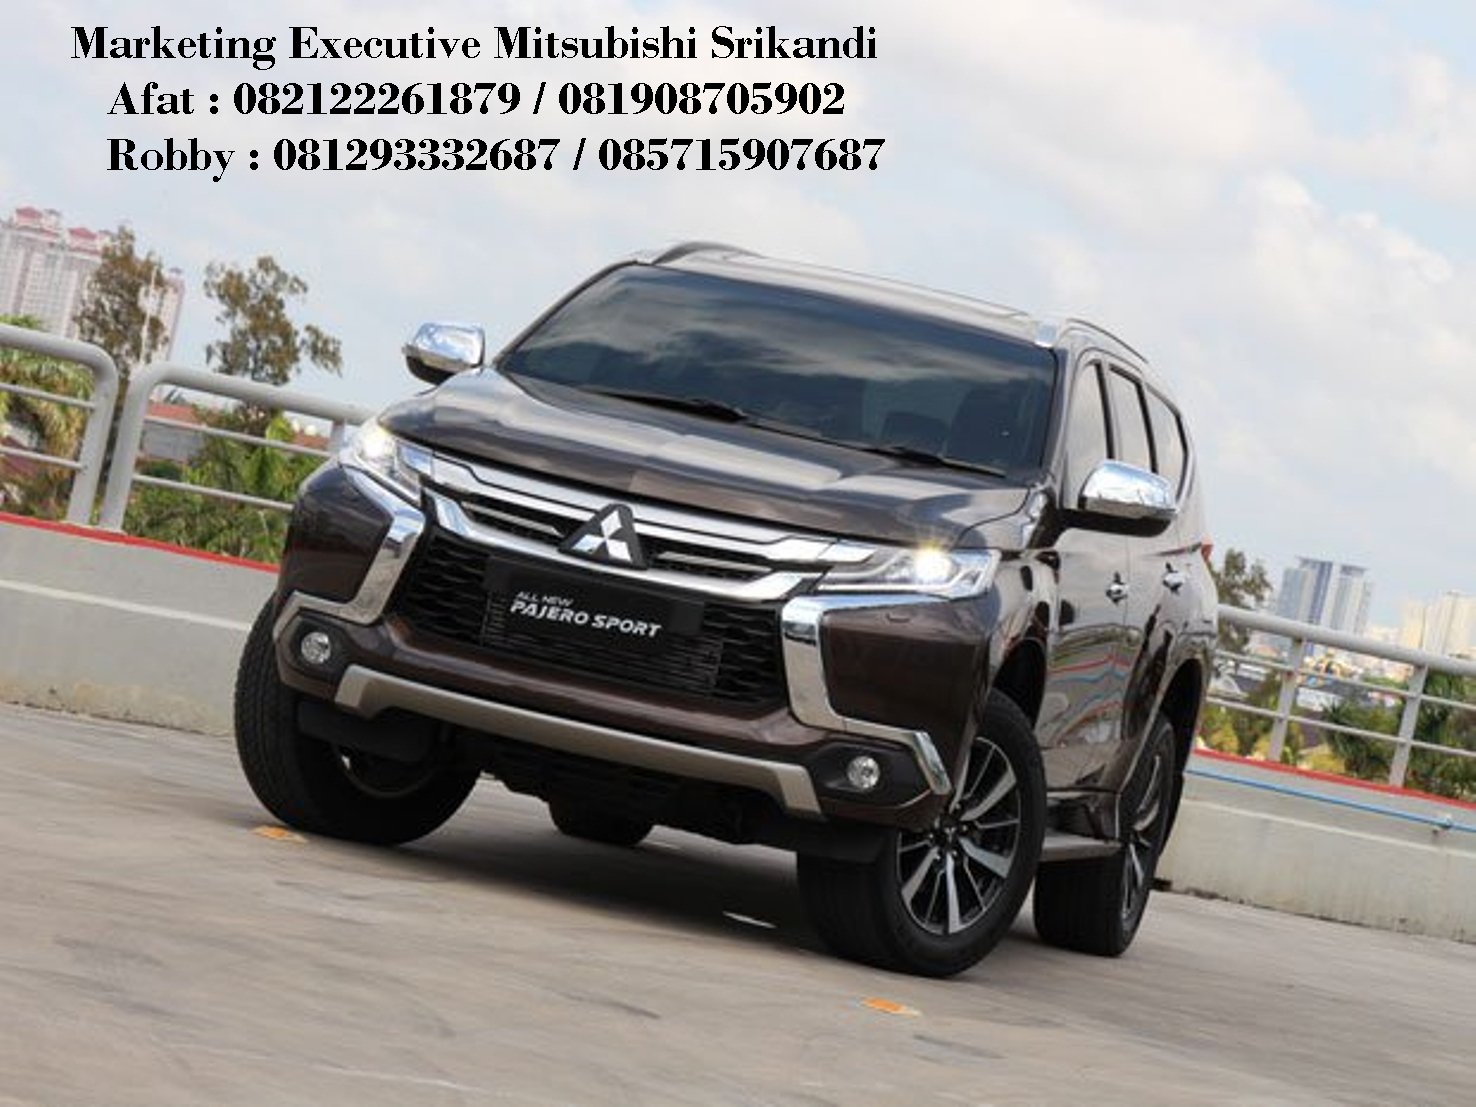 Dealer Resmi Mitsubishi Jakarta HARGA MITSUBISHI NEW PAJERO SPORT